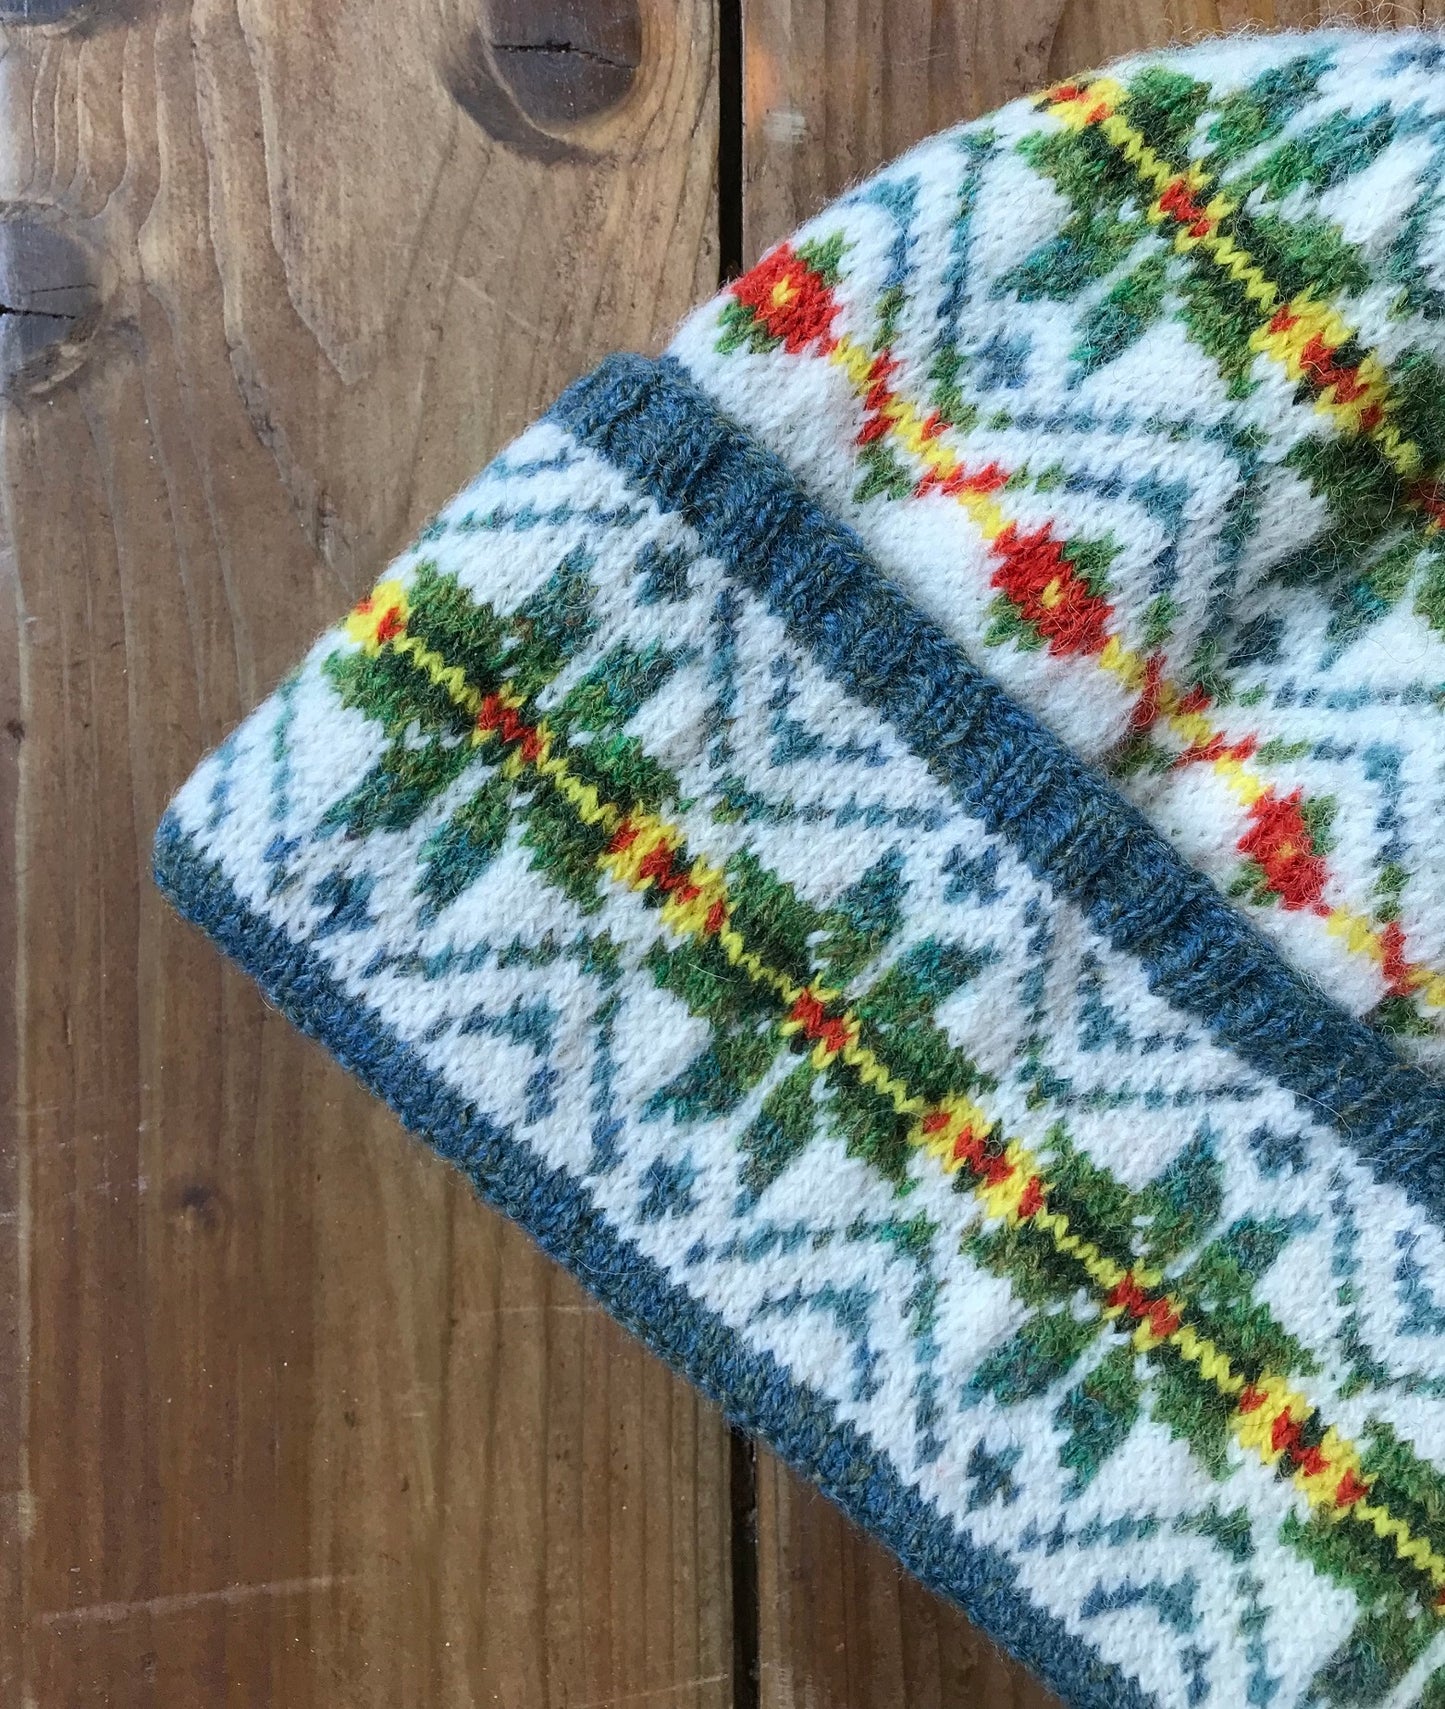 Knitting Jenny Pattern 20: Fair Isle Inspired Fisherman’s Kep and Design Workbook